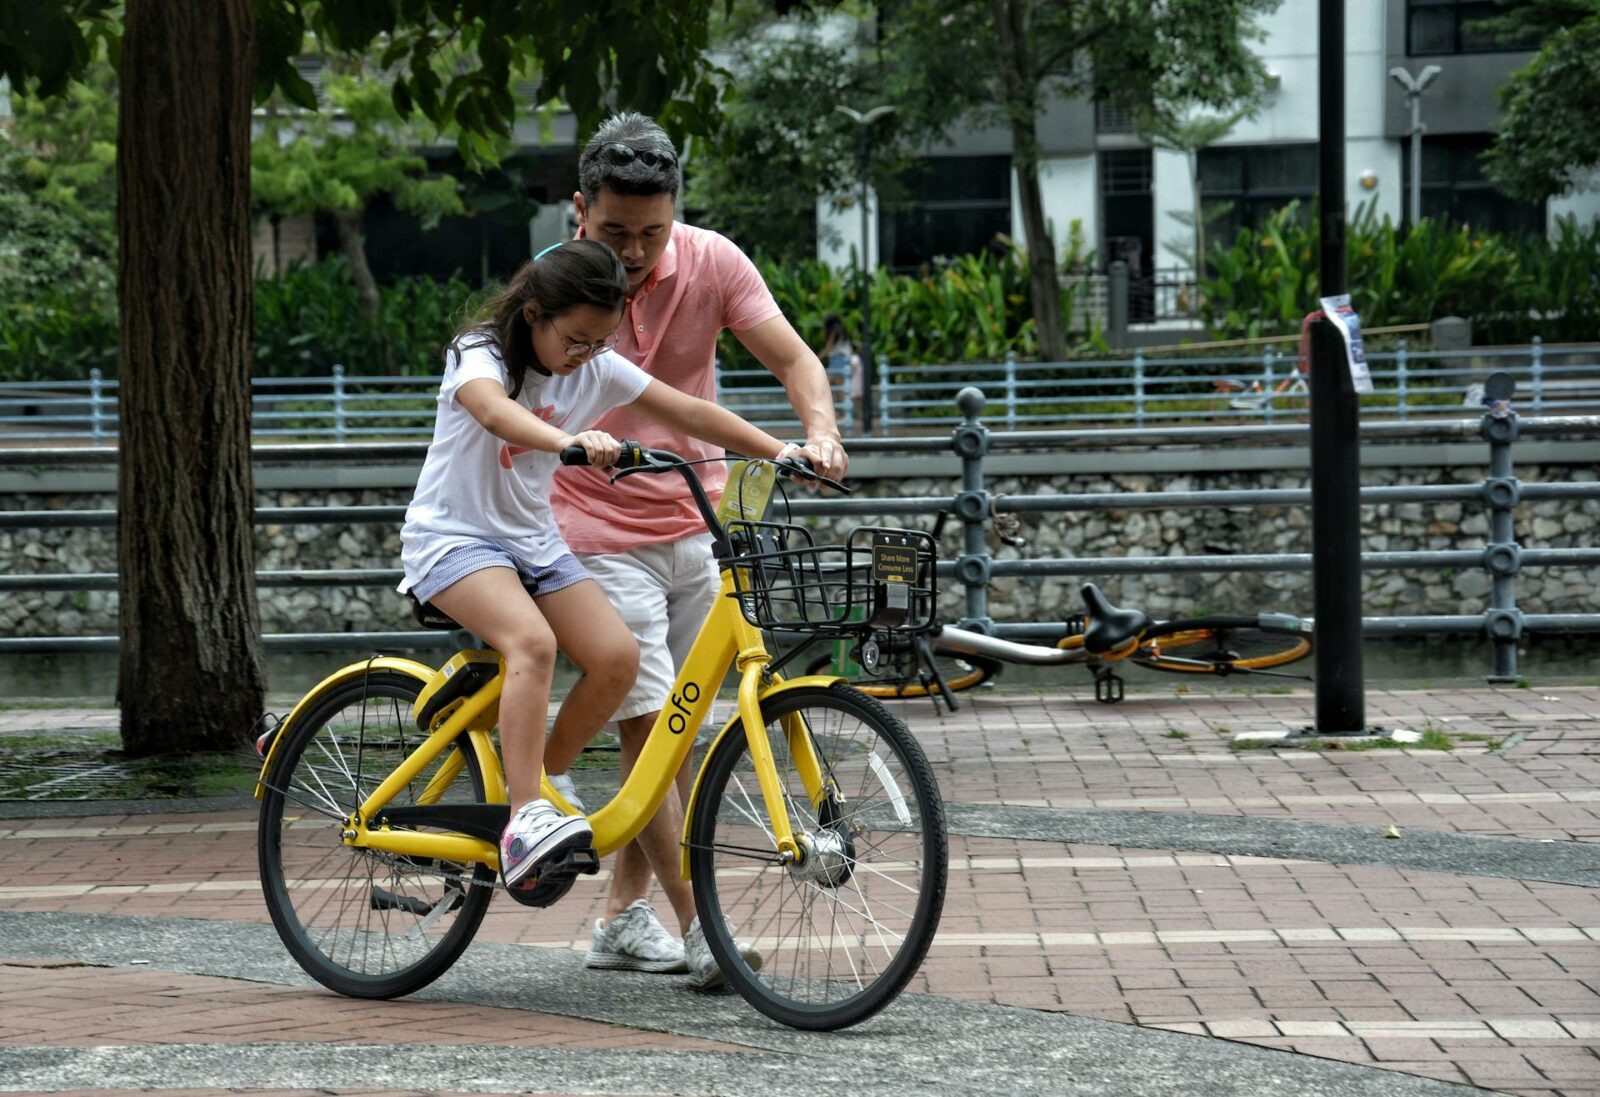 an Asian man helping a girl learn to ride a bike